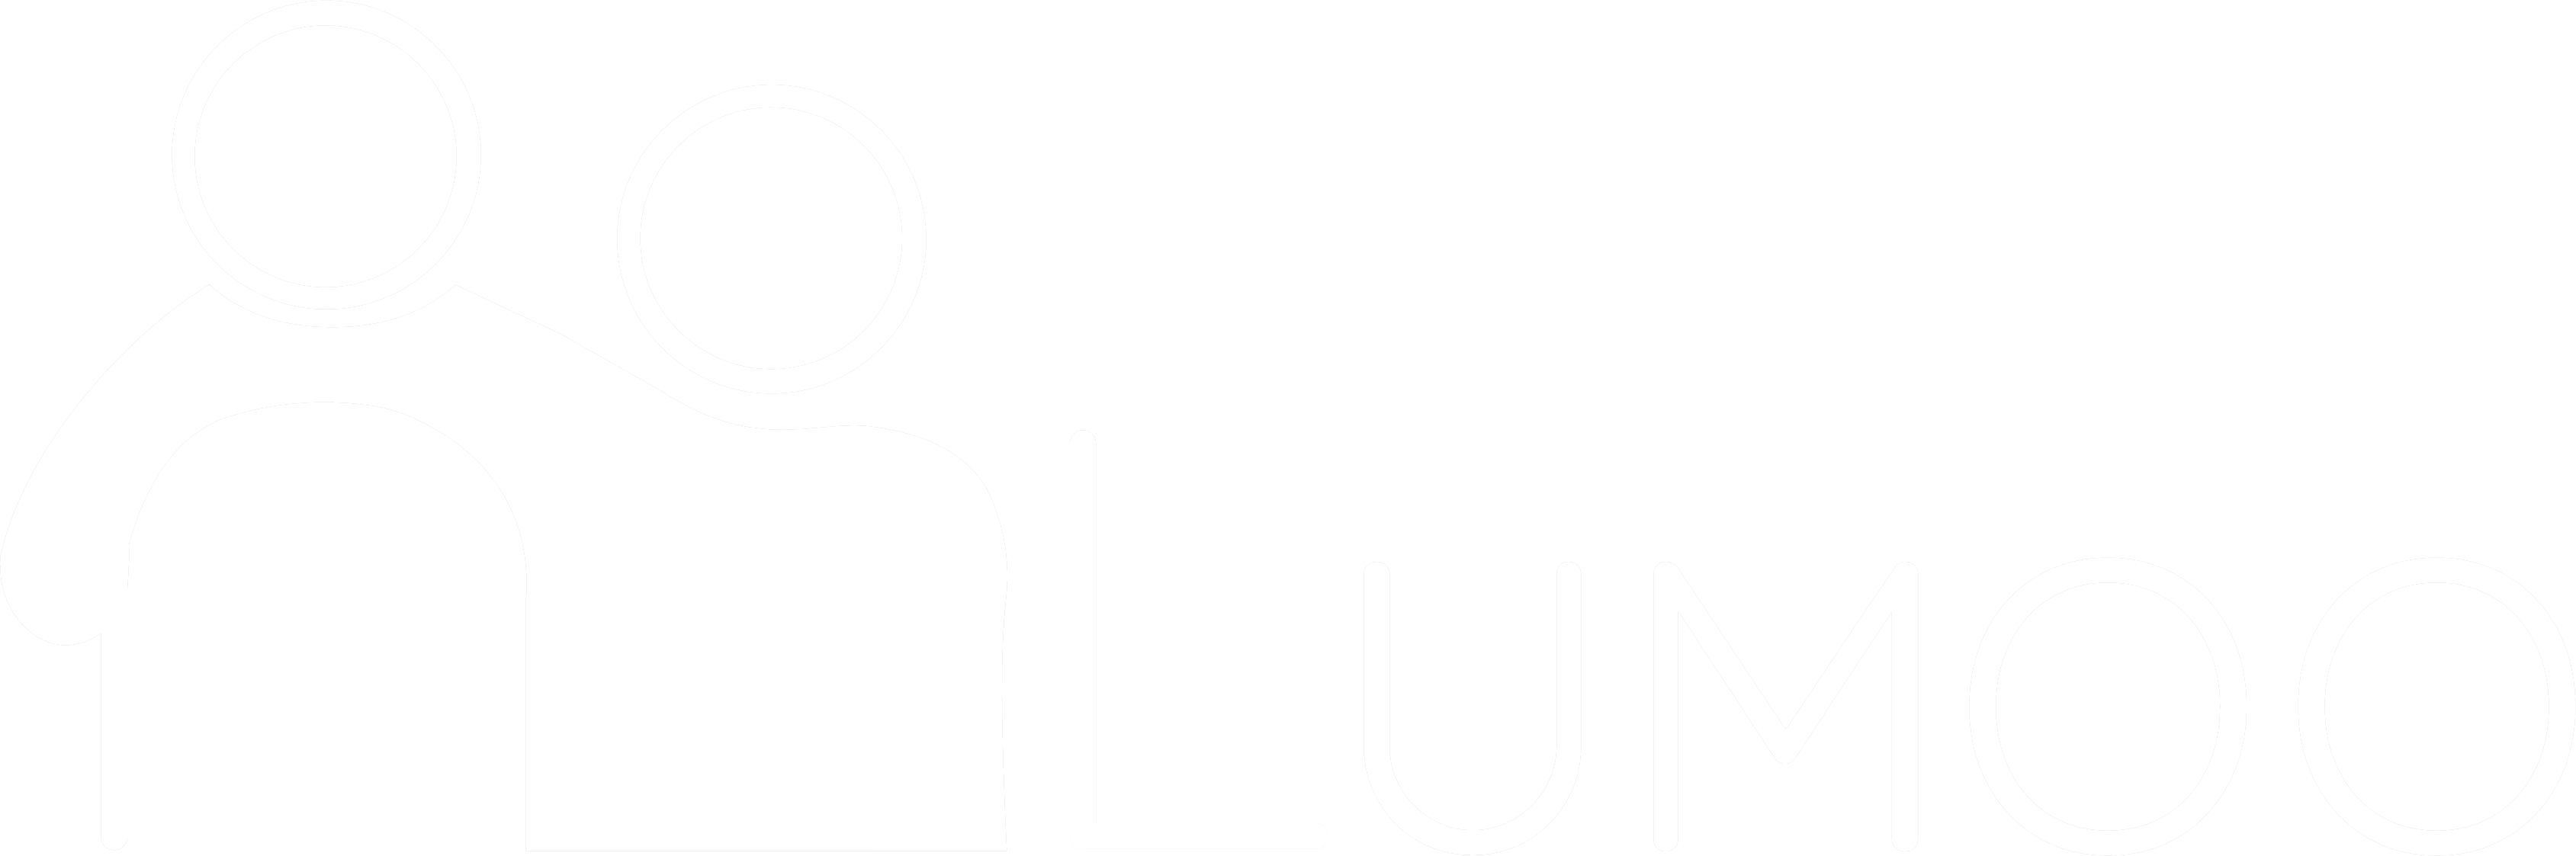 Logo Lumoo weiß